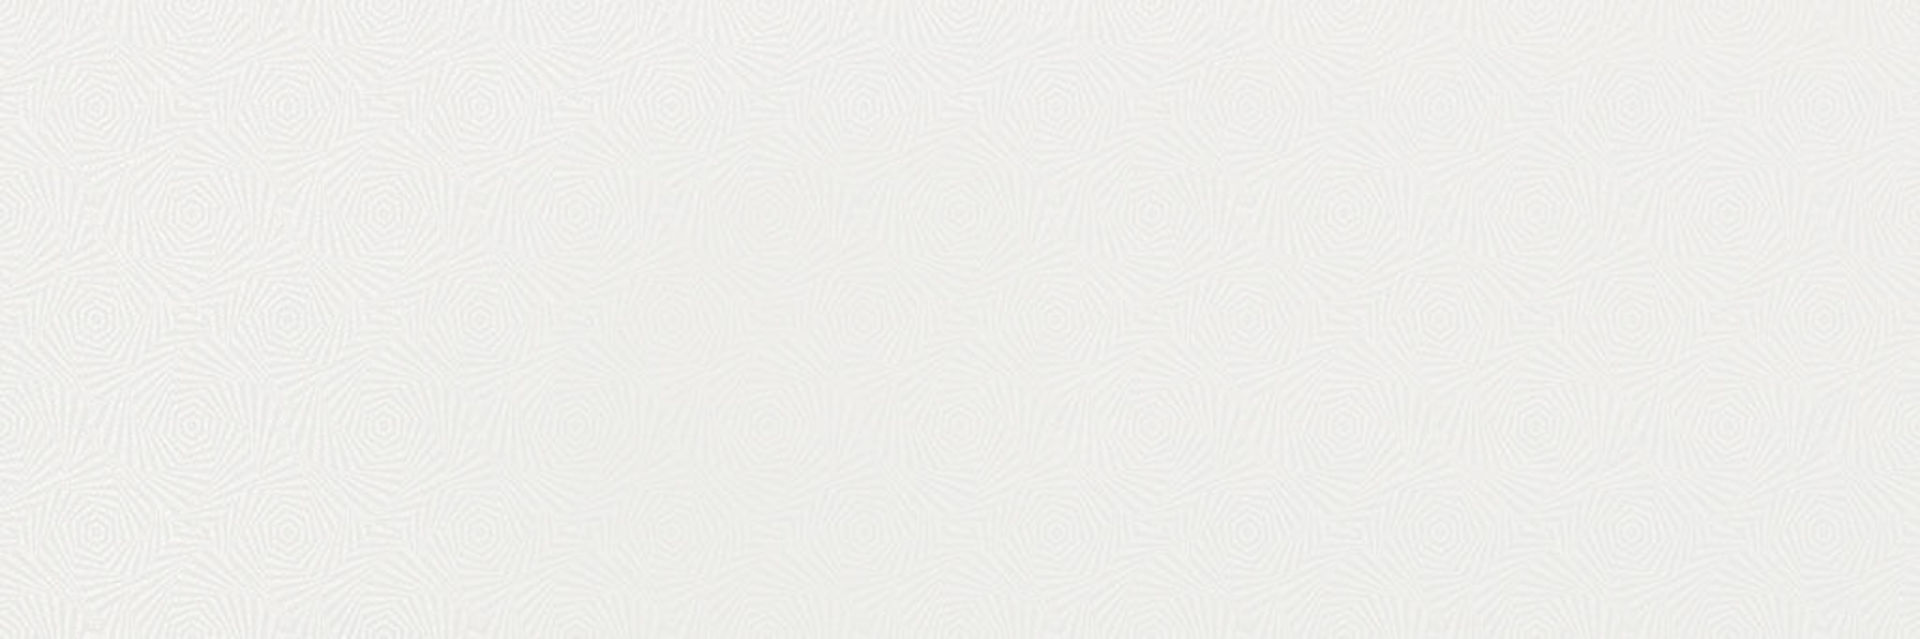 Керамическая плитка CROMATICA WHITE BRILLO 25*75 / коллекция CROMATICA / производитель Cifre / страна Испания